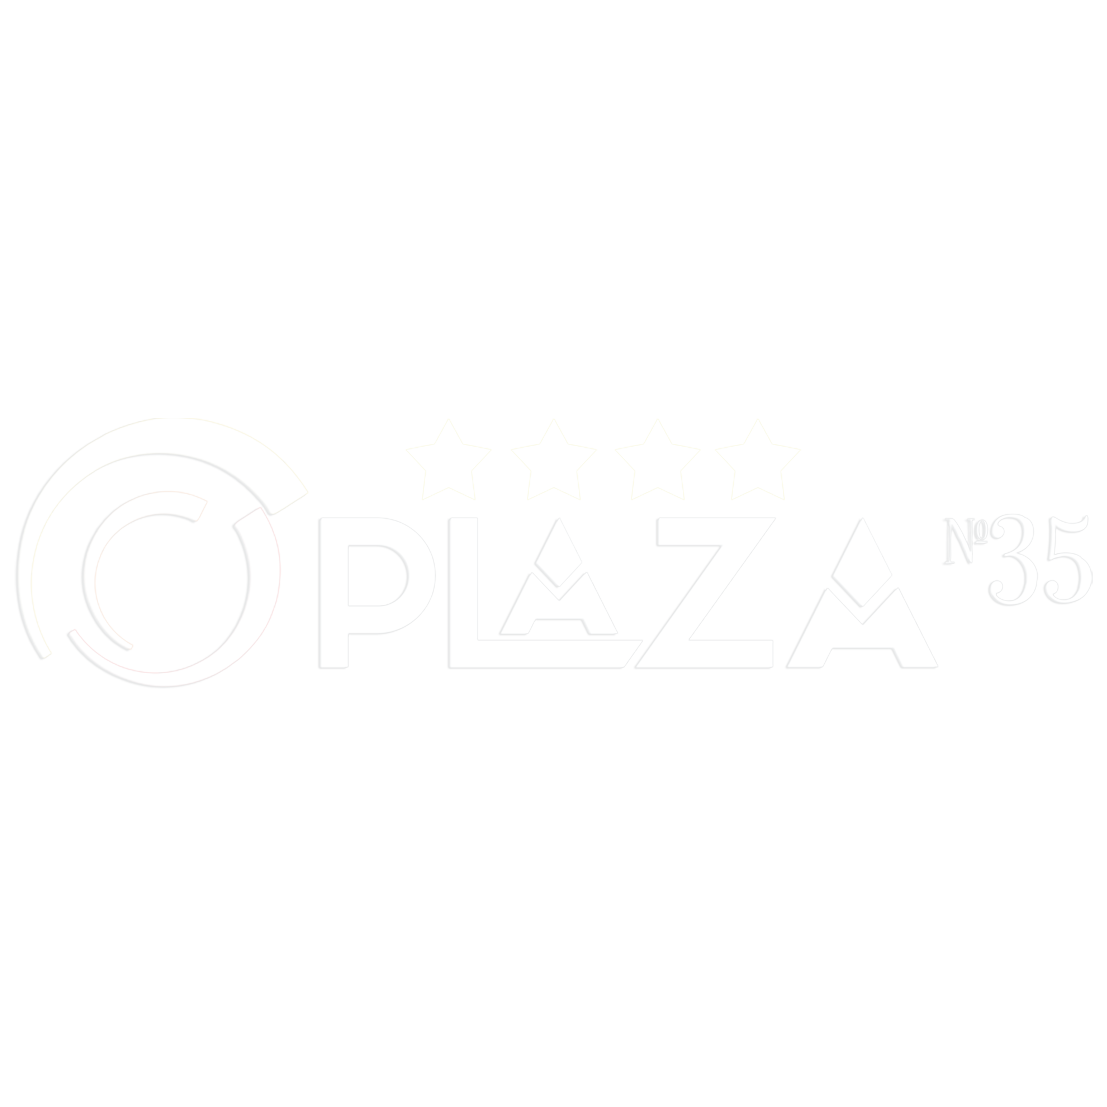 Plaza35